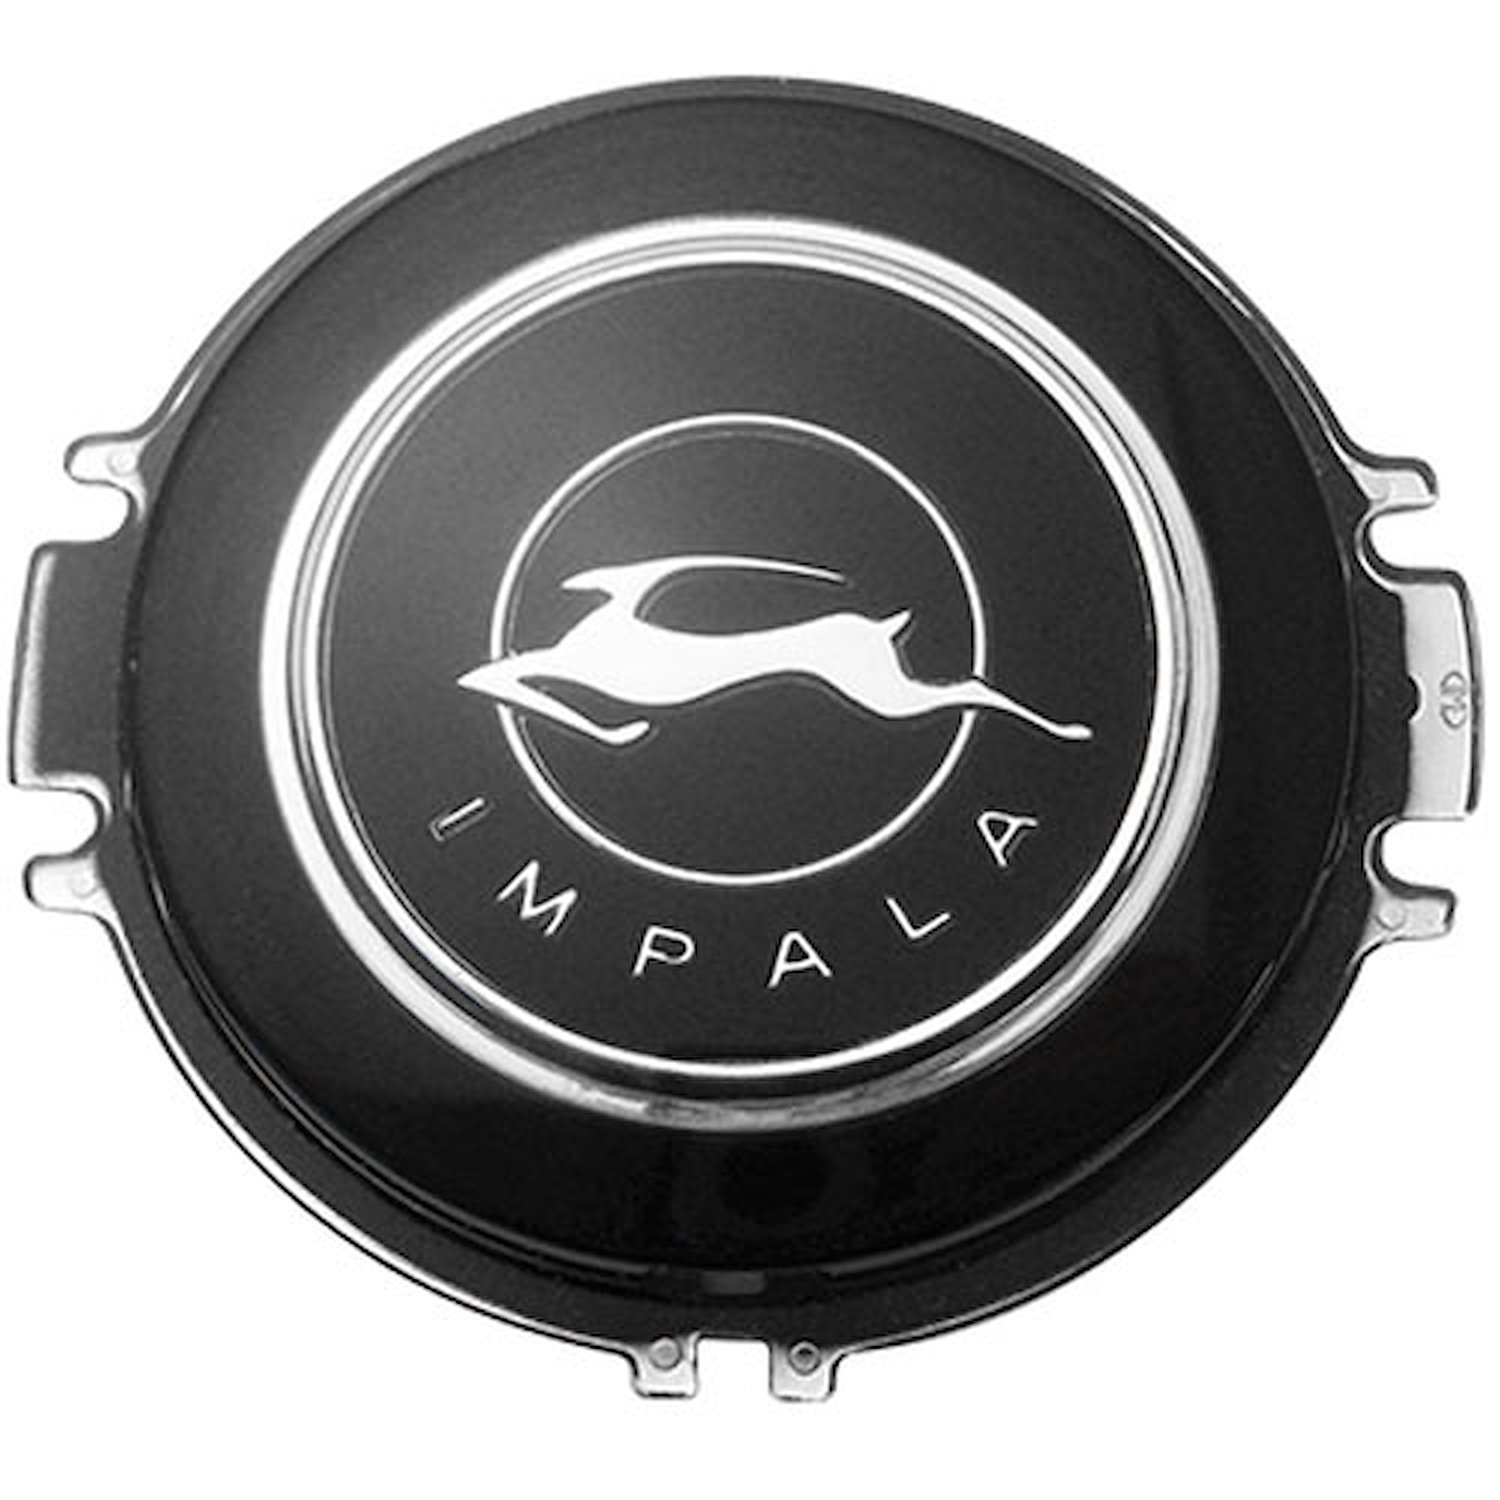 Horn Ring Emblem 1964 Chevy Impala